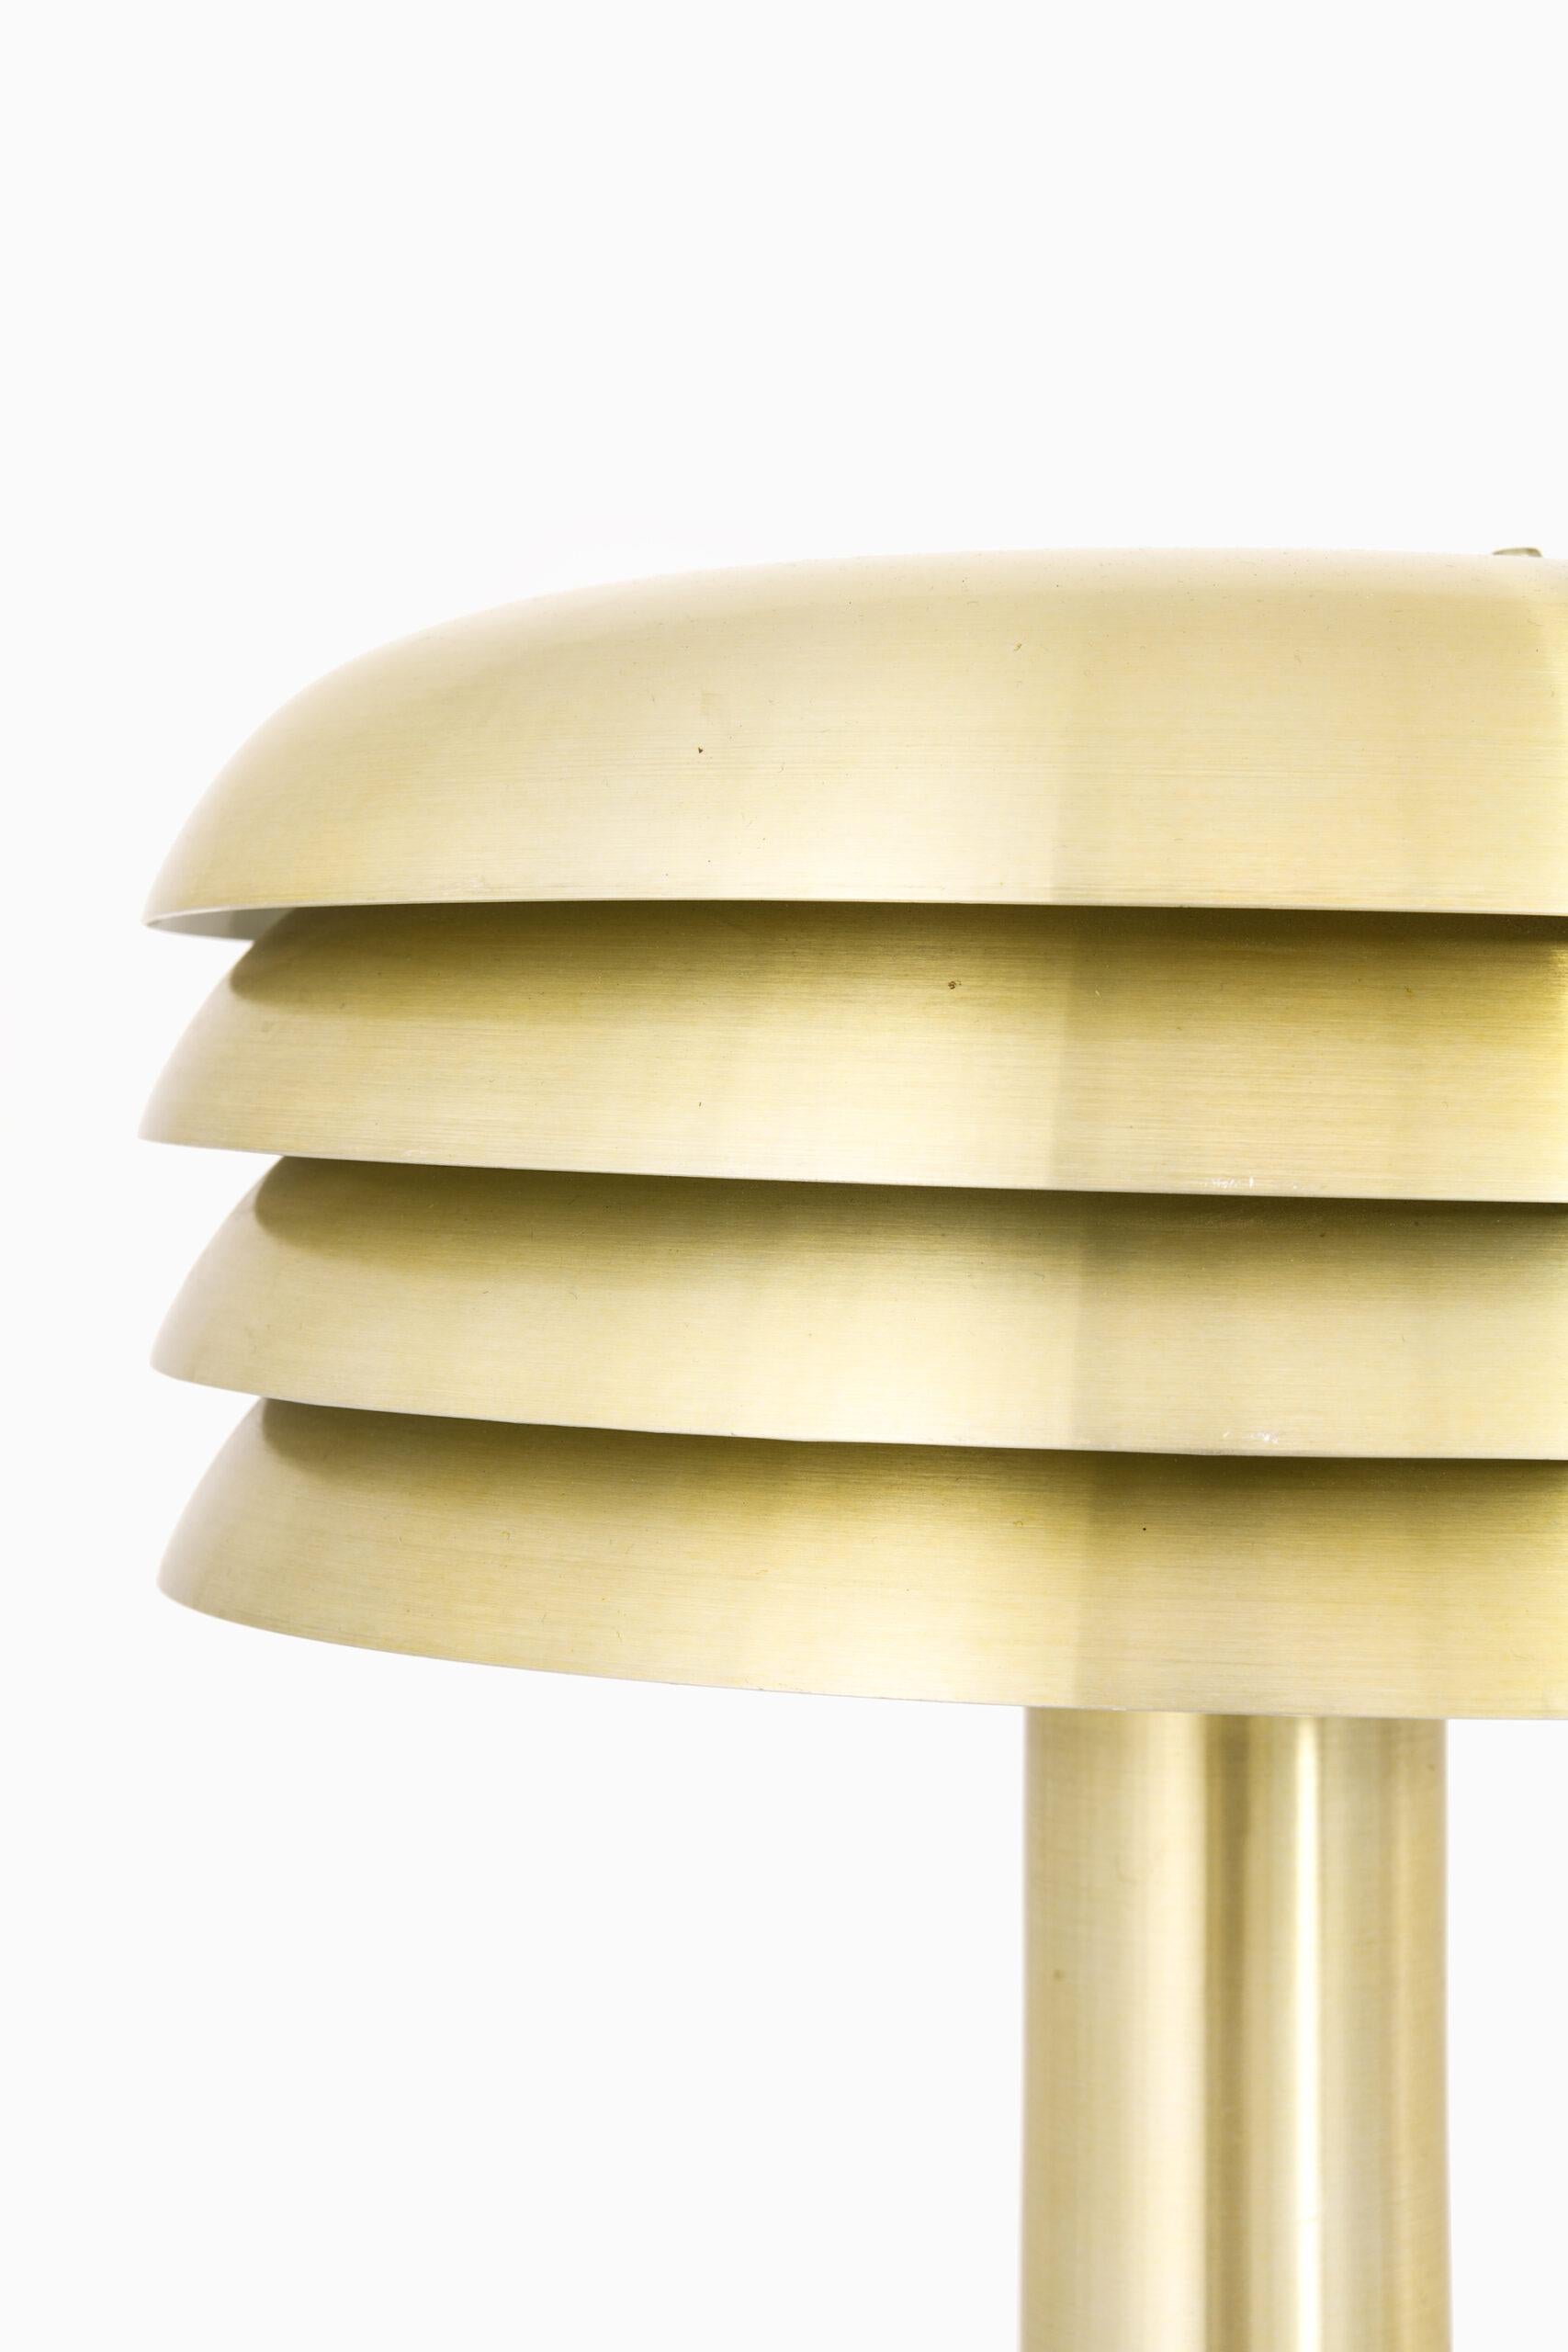 Table lamp model BN-26 designed by Hans-Agne Jakobsson. Produced by Hans-Agne Jakobsson AB in Markaryd, Sweden.